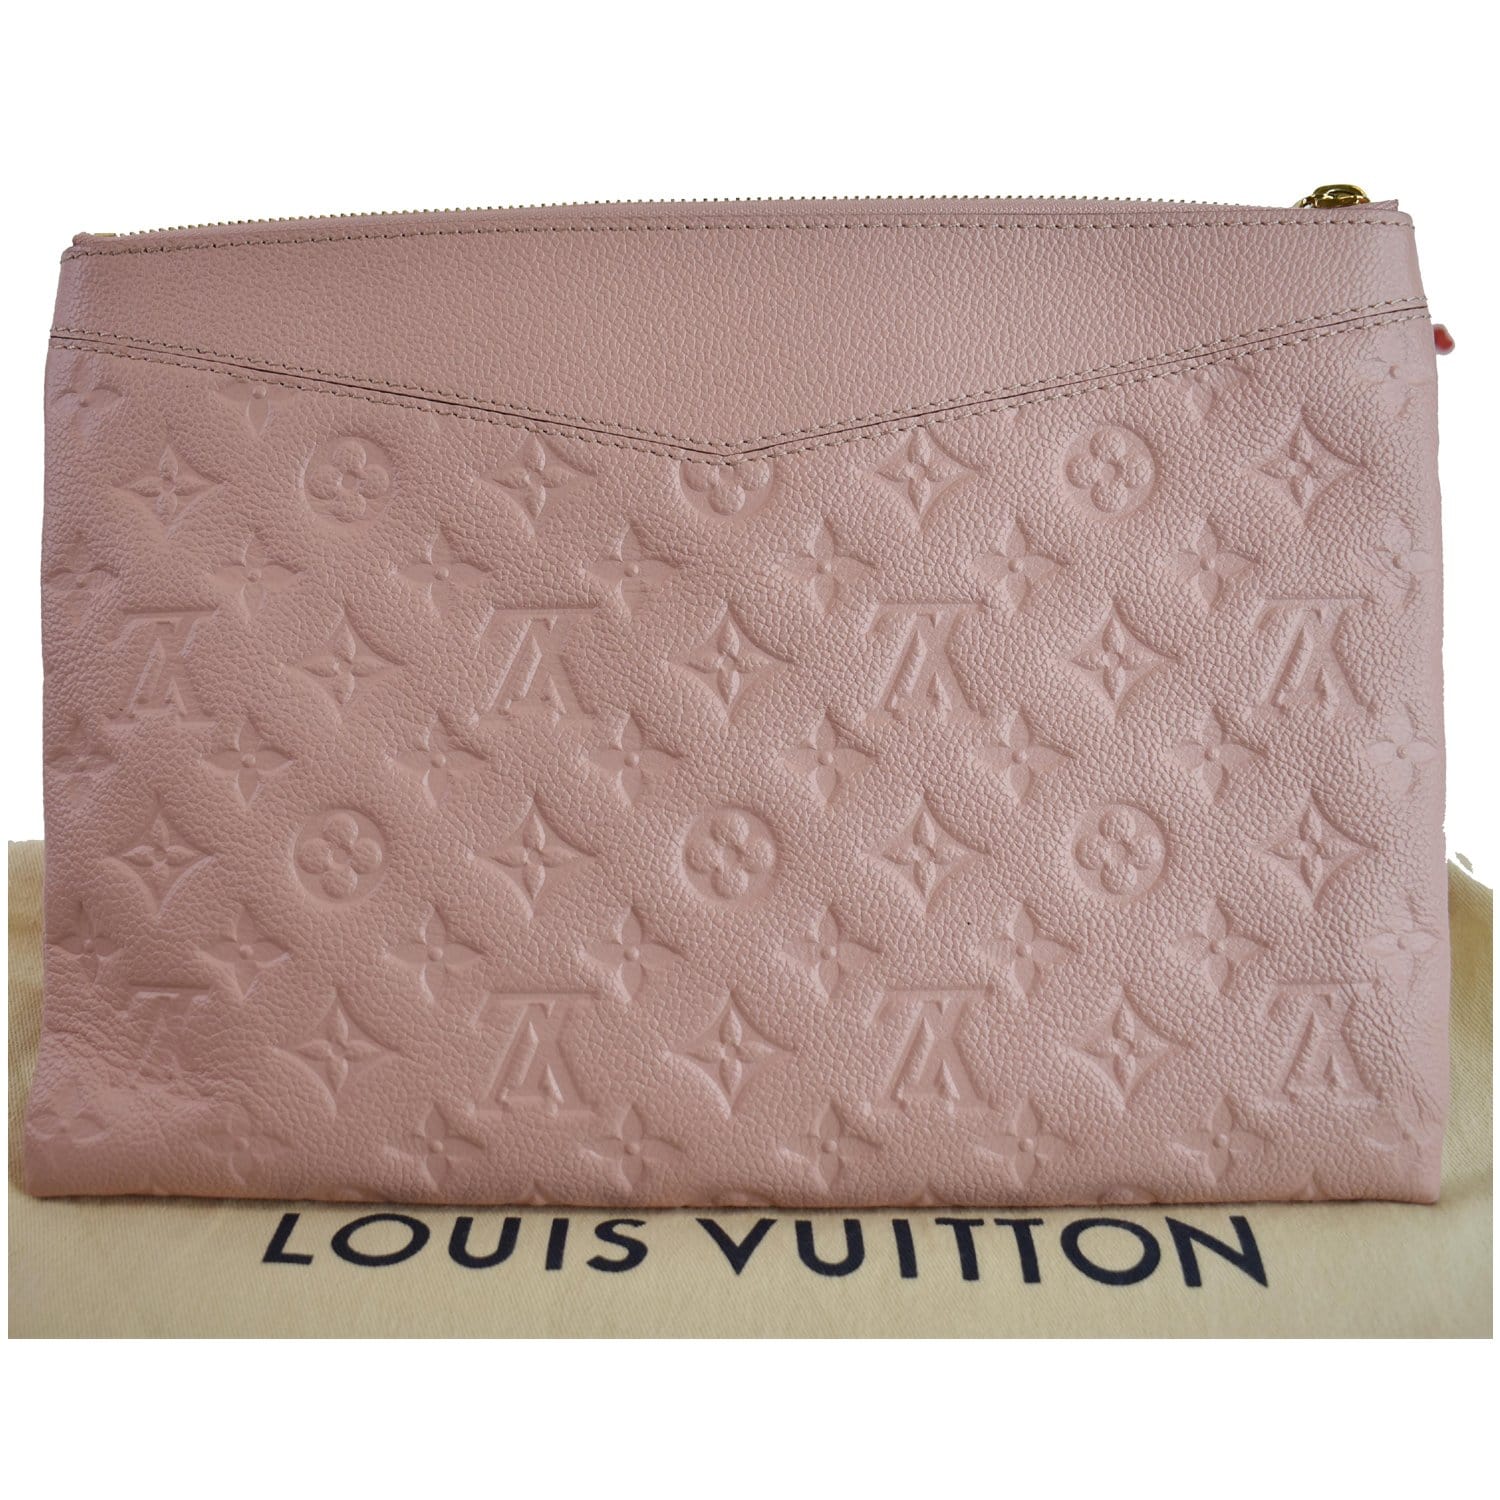 Unboxing Louis Vuitton Mini Pochette Empreinte leather in Rose